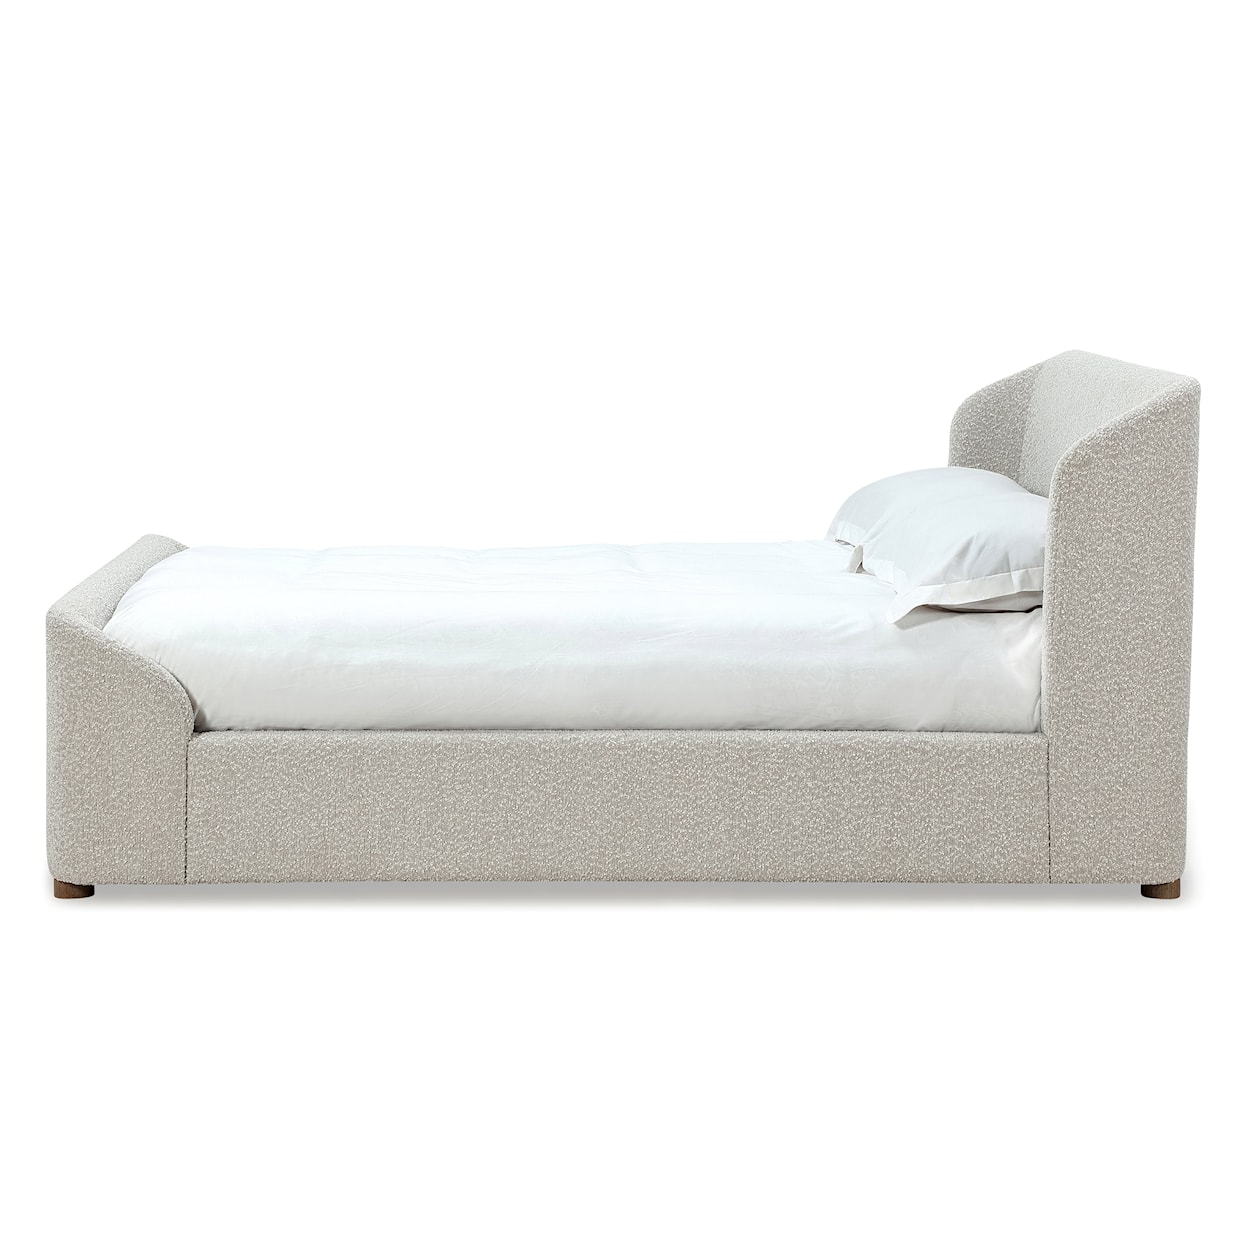 Modus International Kiki Queen Upholstered Platform Bed